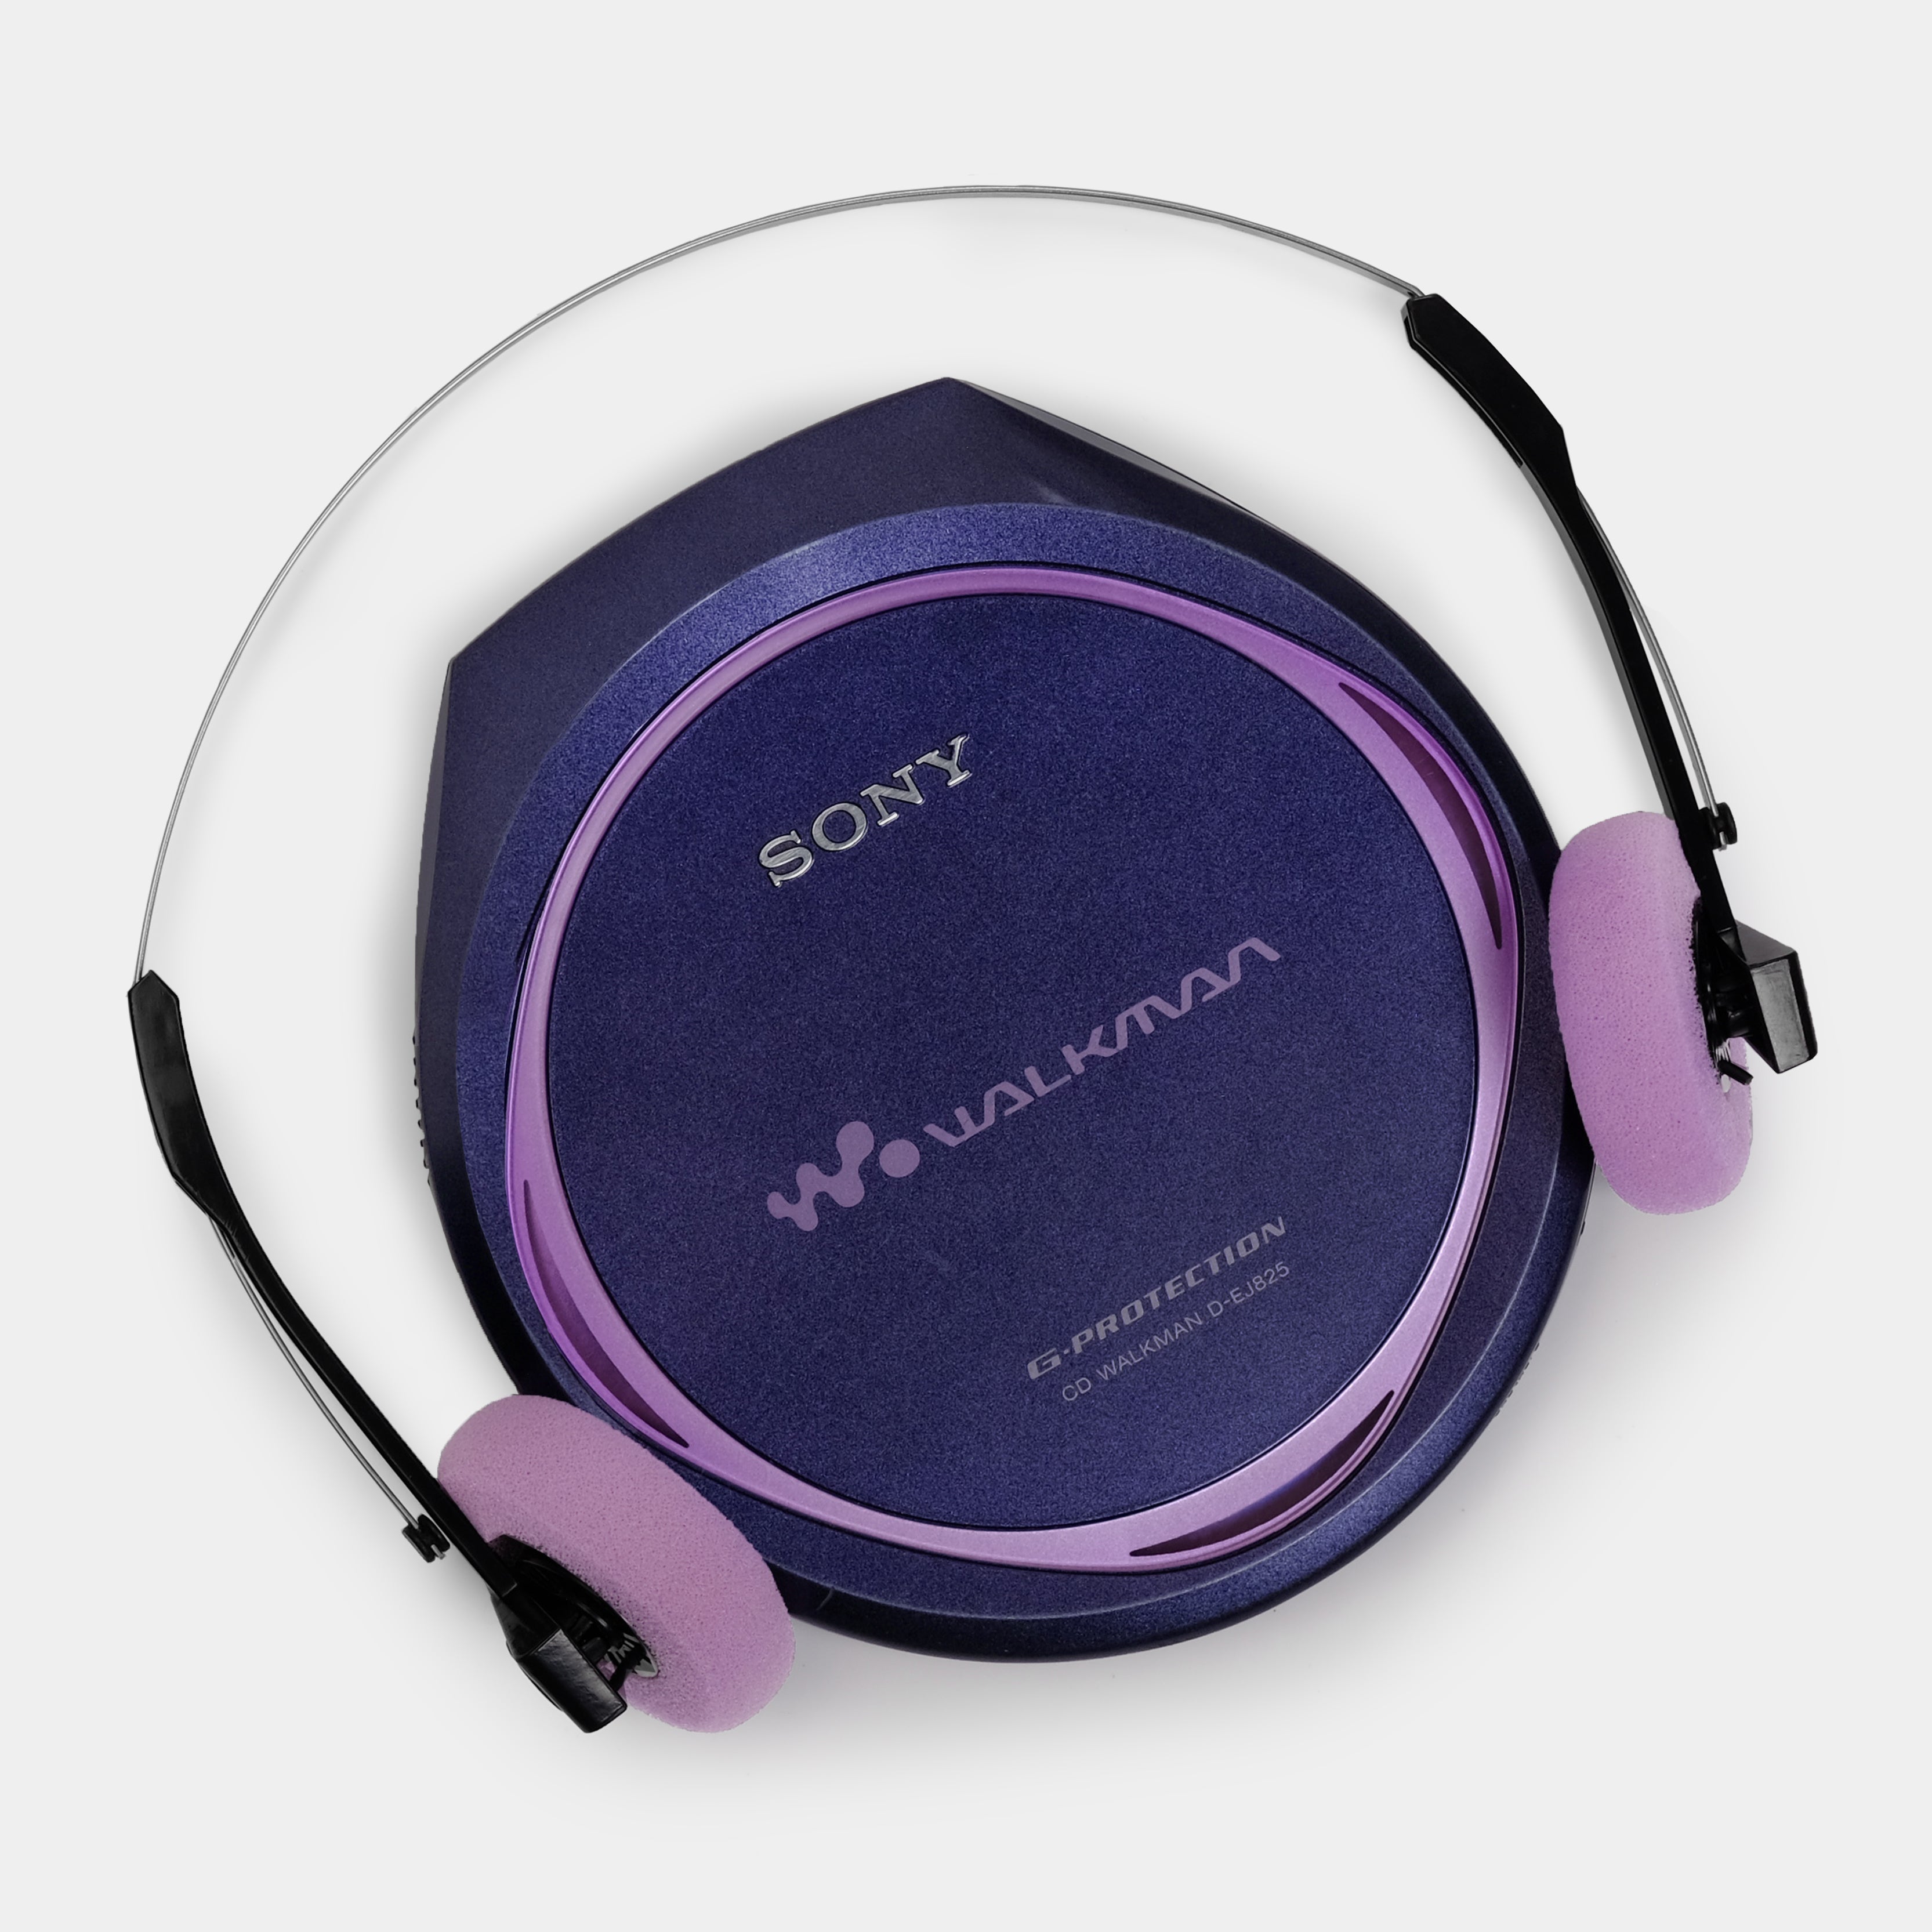 Sony Walkman D-EJ825 Portable CD Player